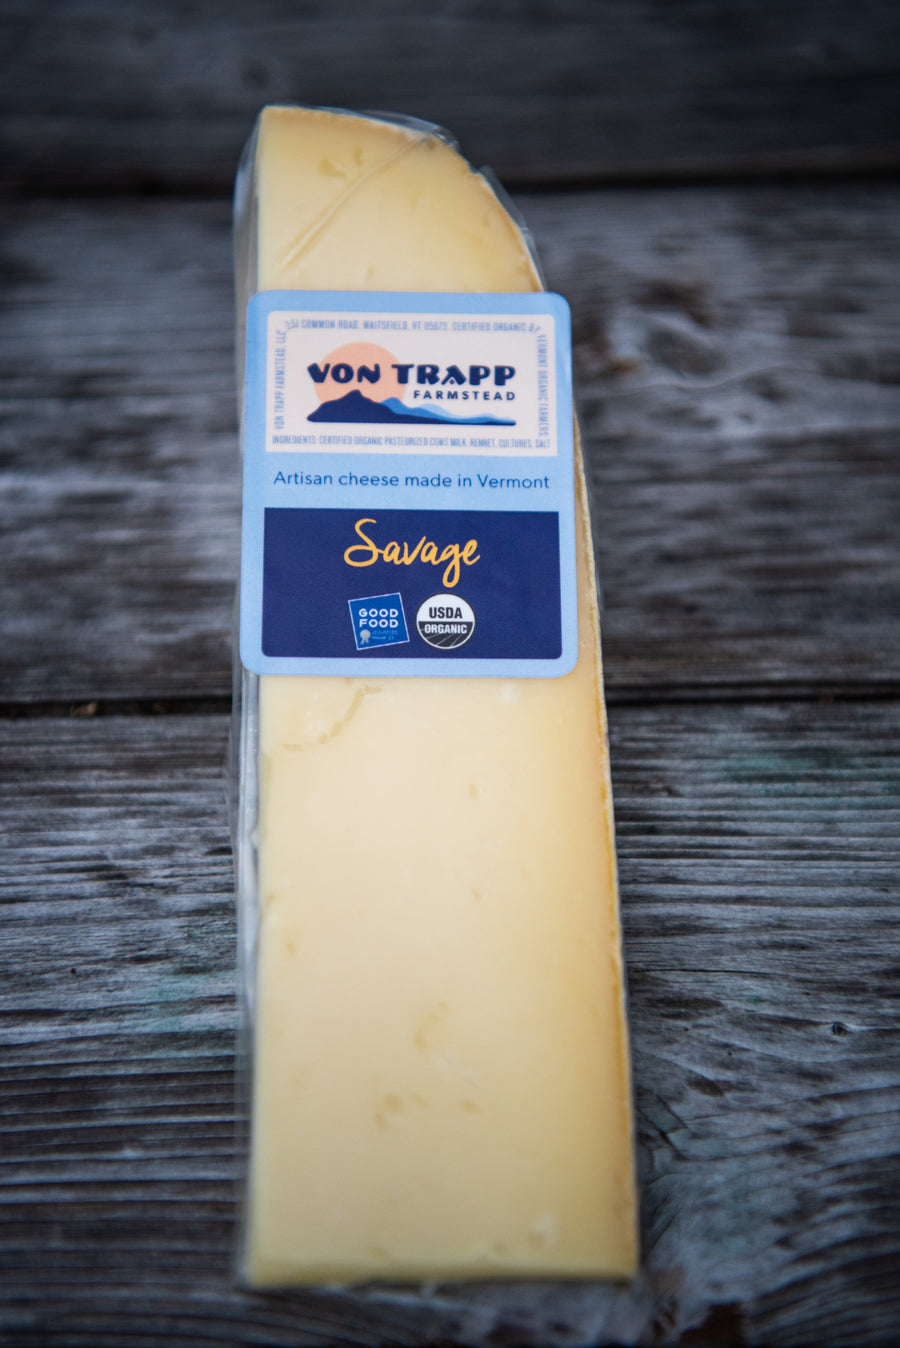 Von Trapp Farmstead Savage cheese